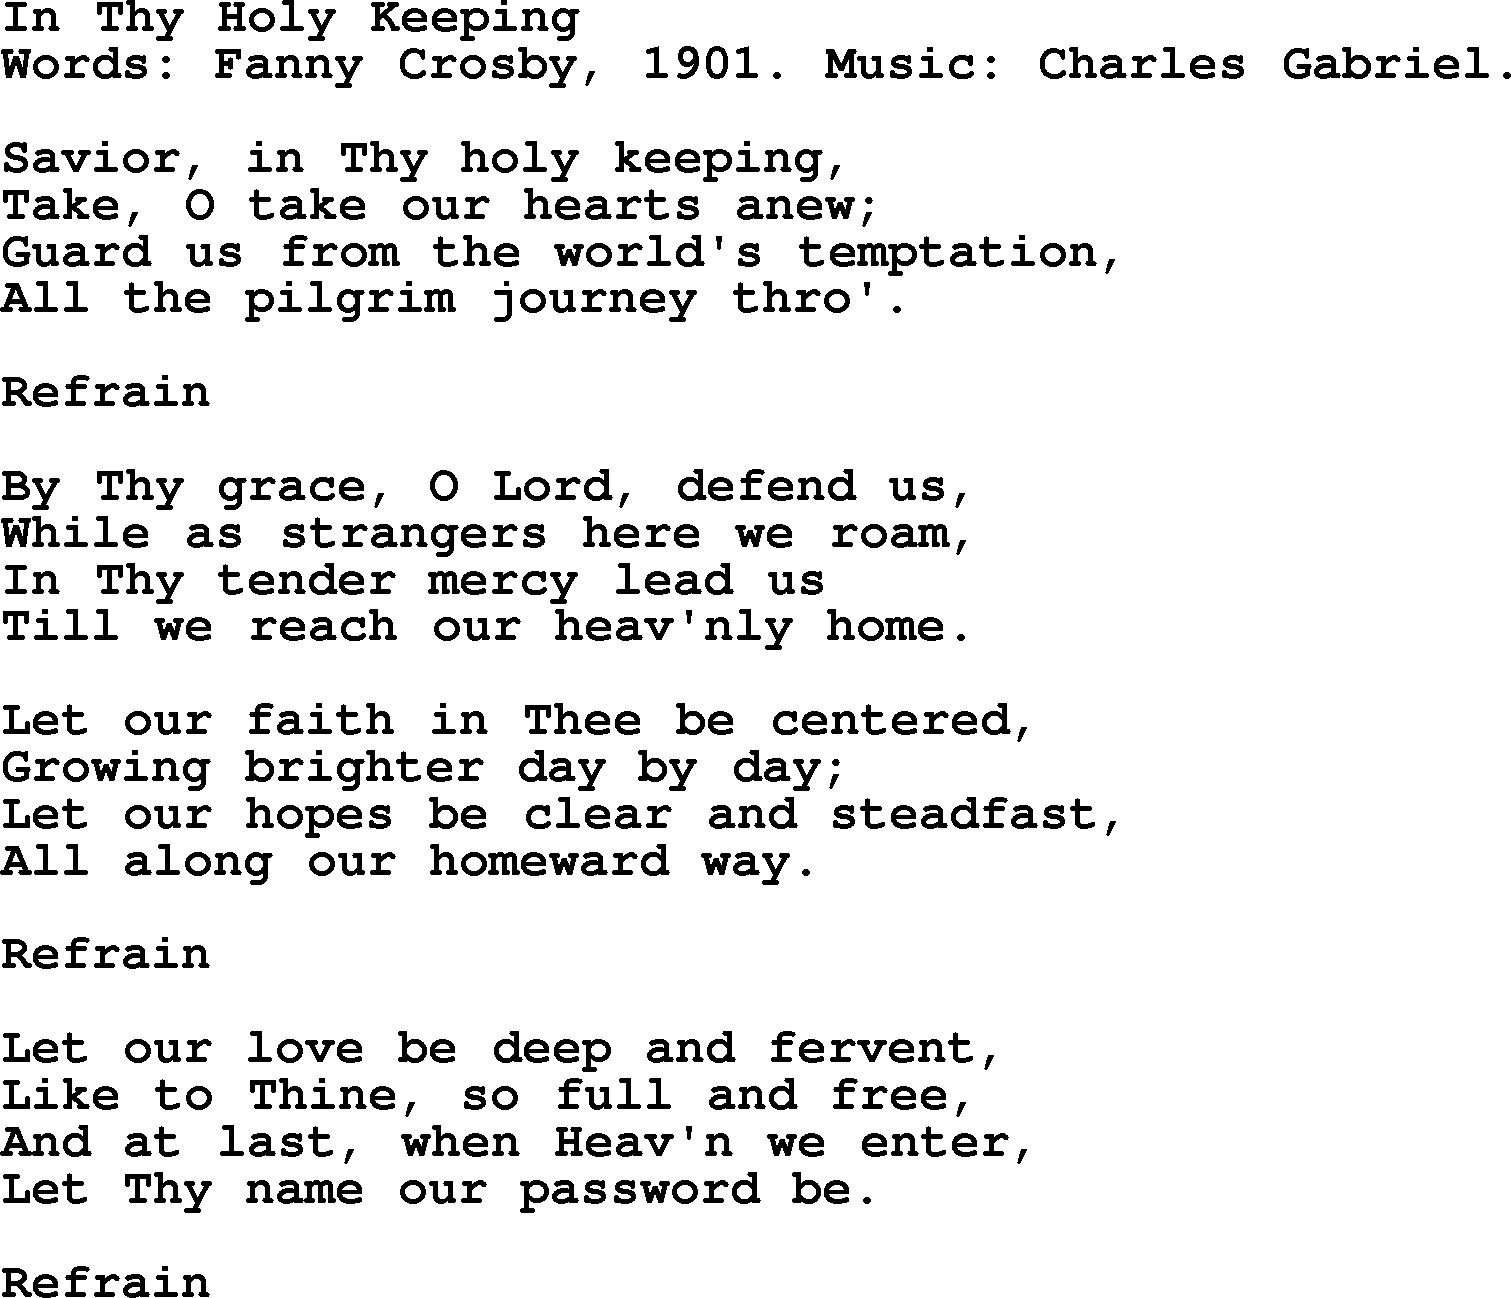 Fanny Crosby song: In Thy Holy Keeping, lyrics